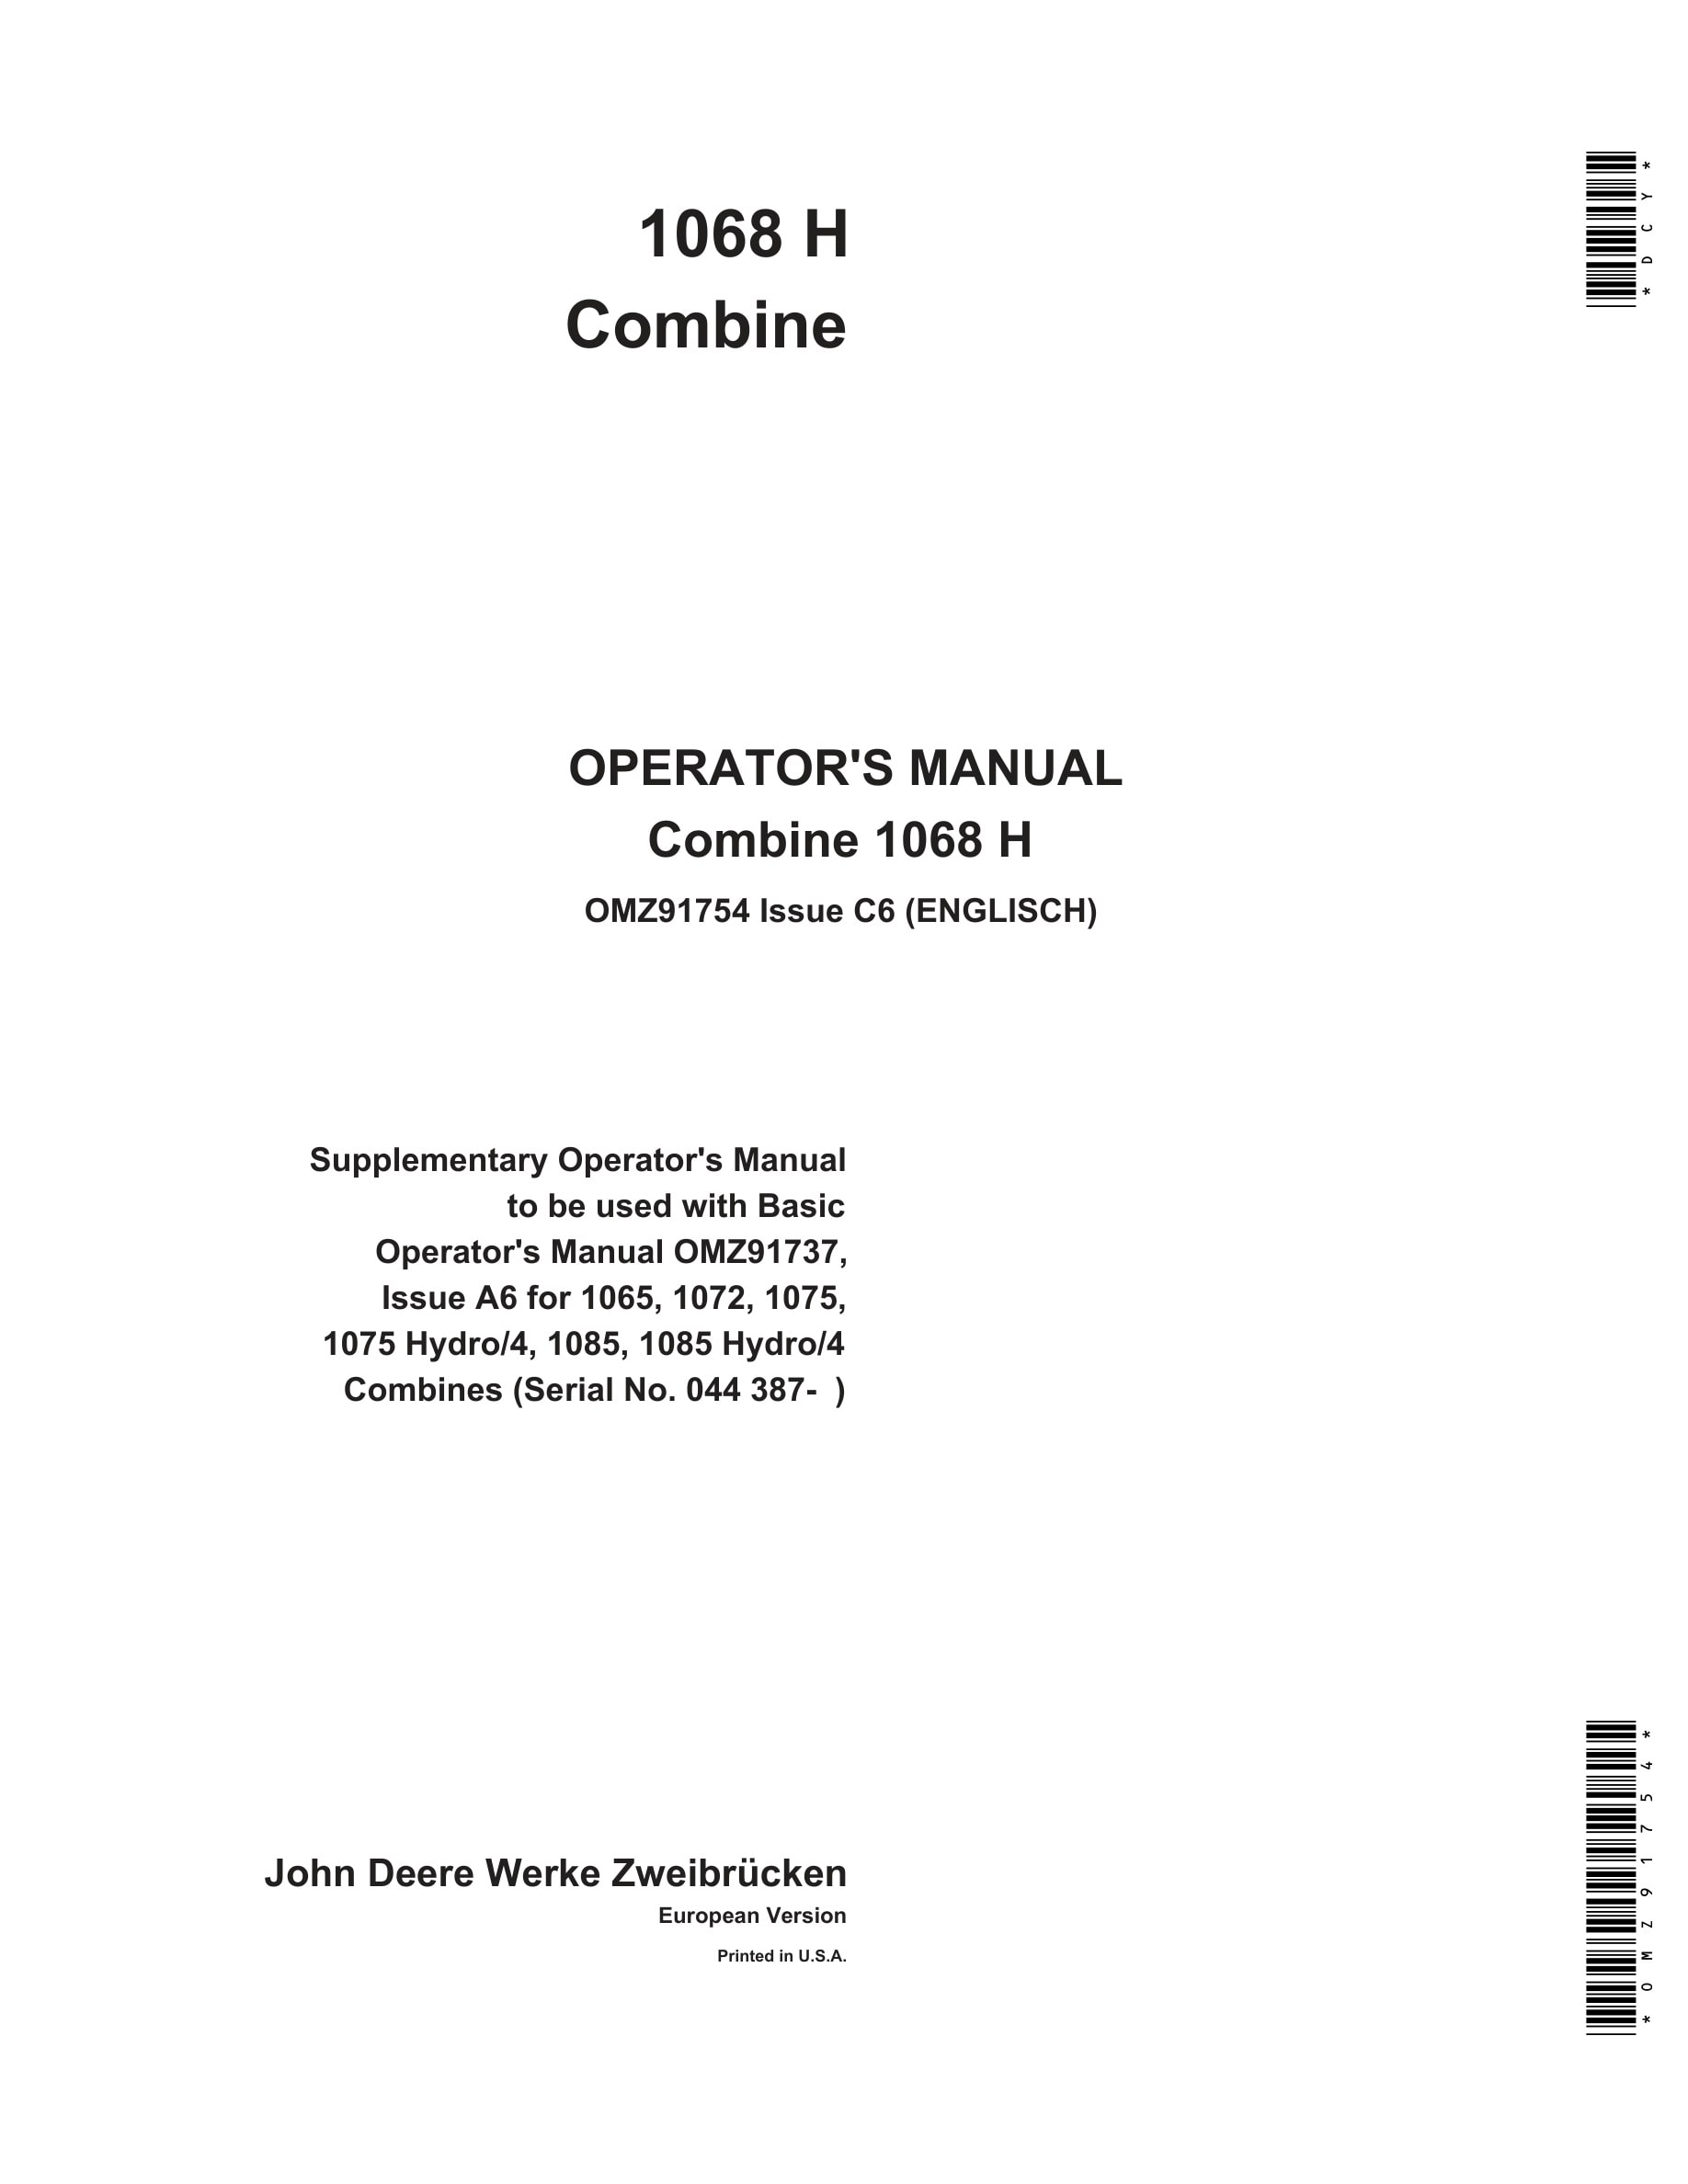 John Deere 1068 H Combine Operator Manual OMZ91754-1